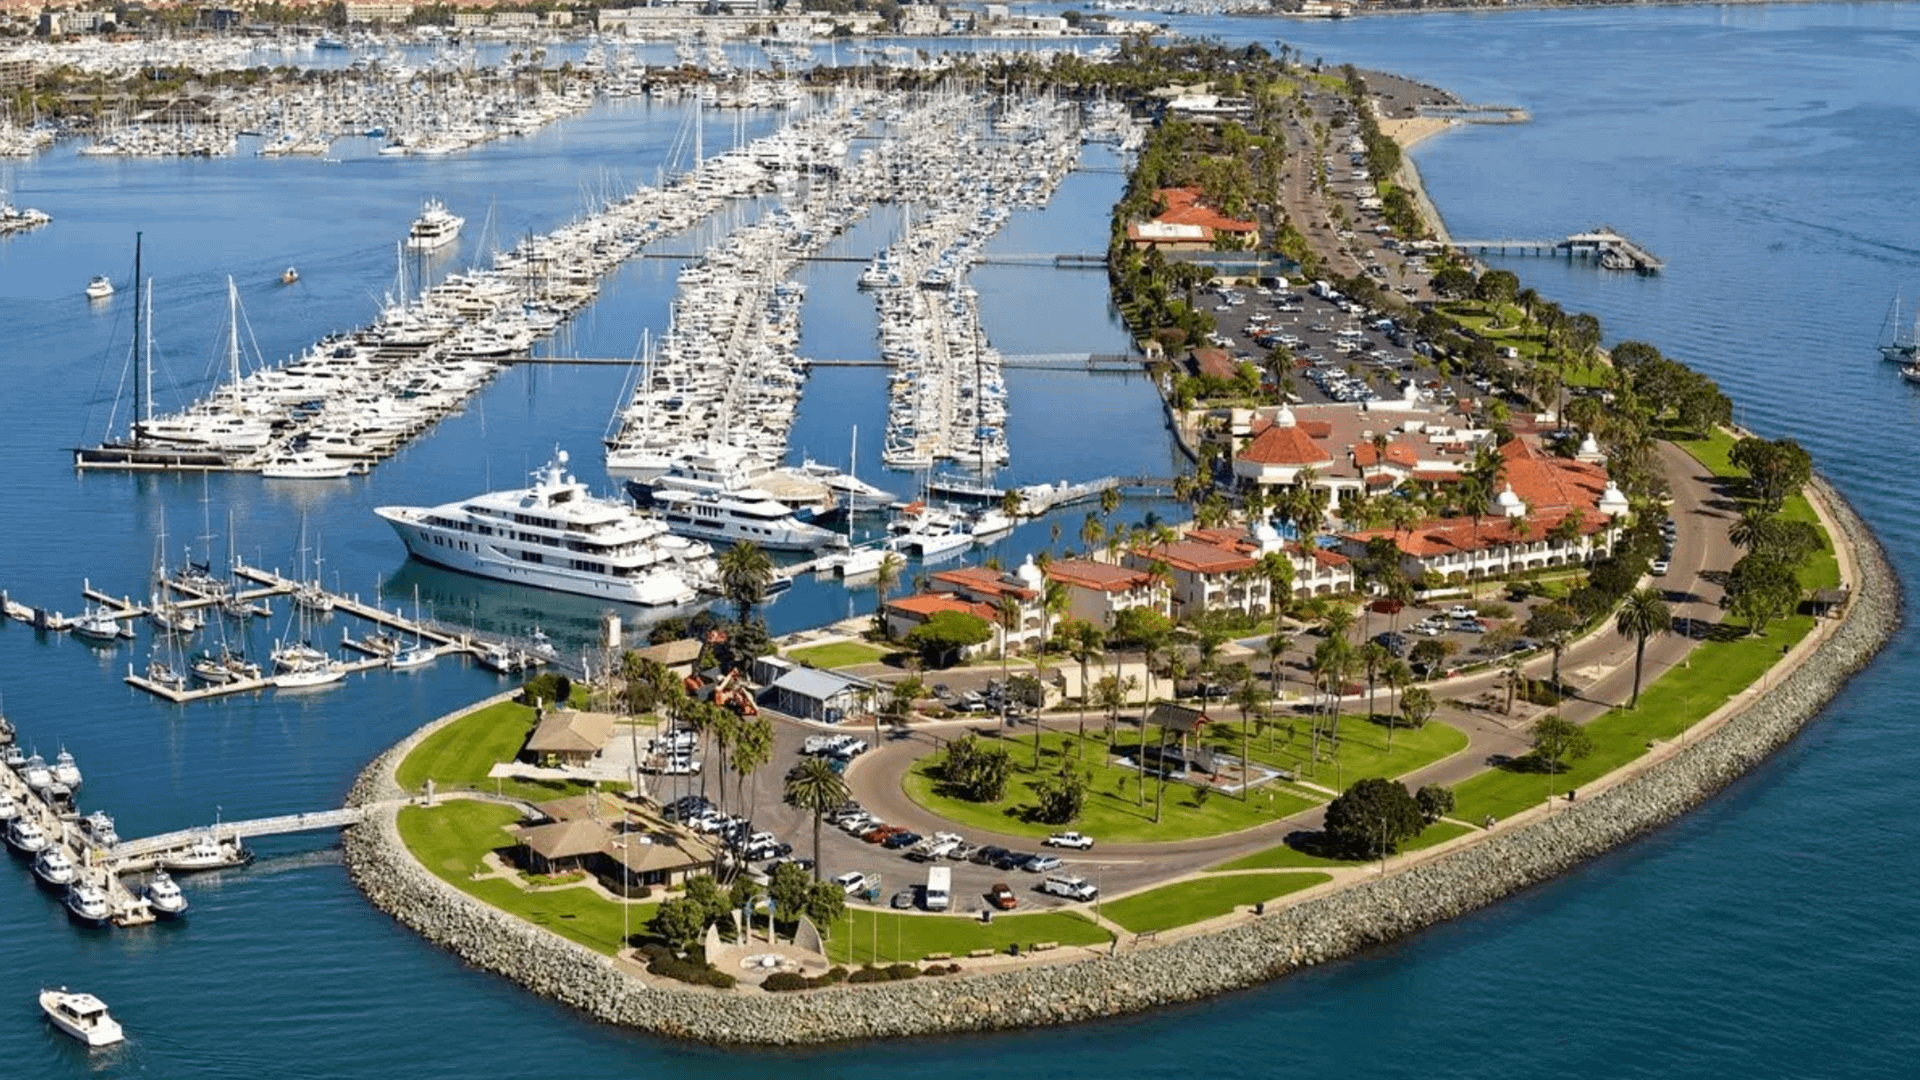 Kona Kai Resort San Diego, Best Group Getaways San Diego